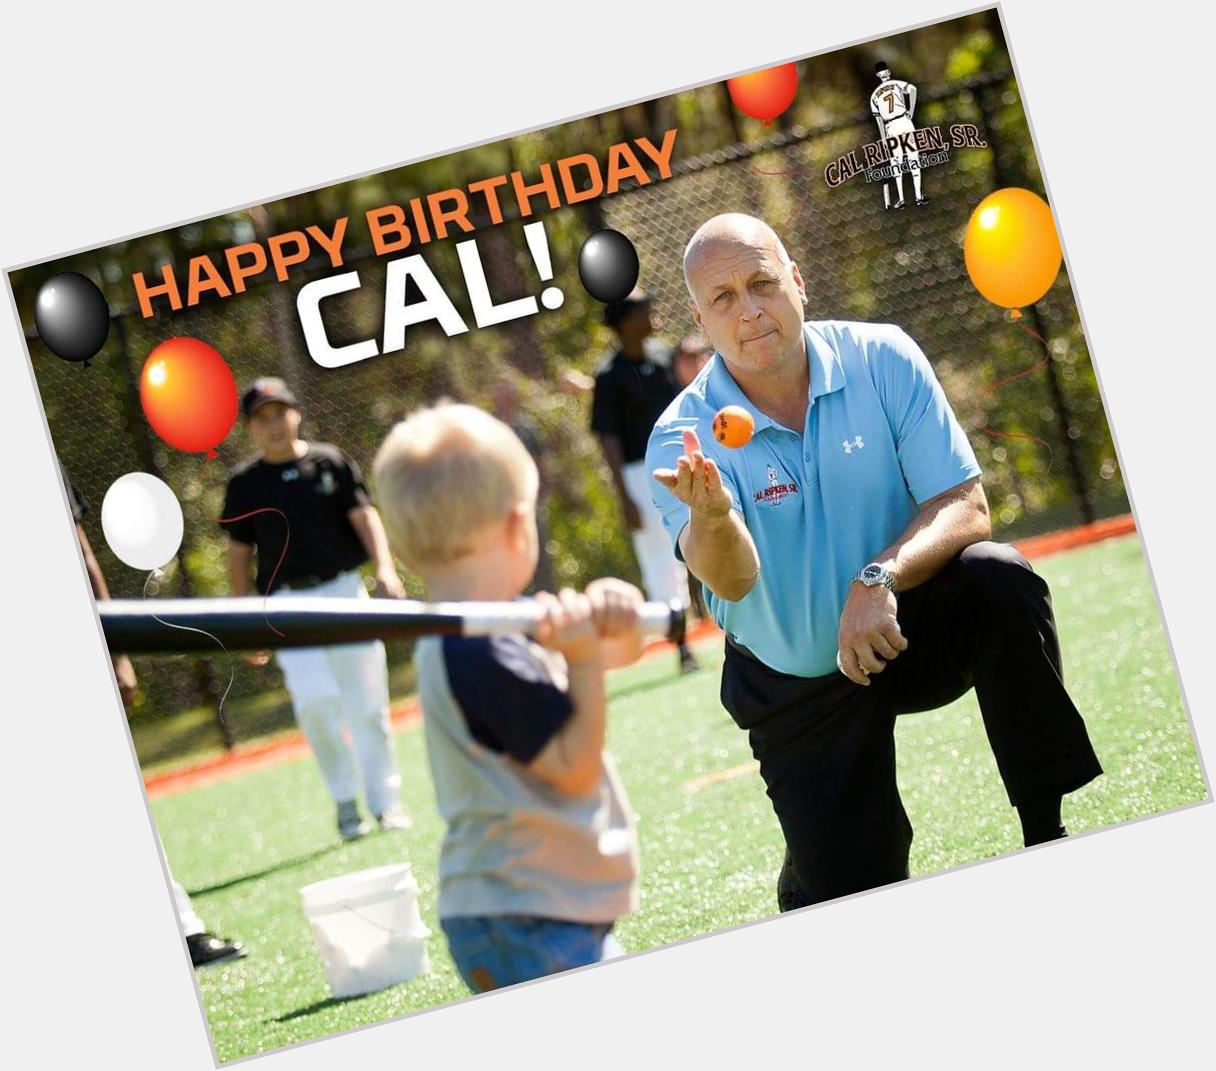 Wishing legend Cal Ripken .... Happy Birthday 